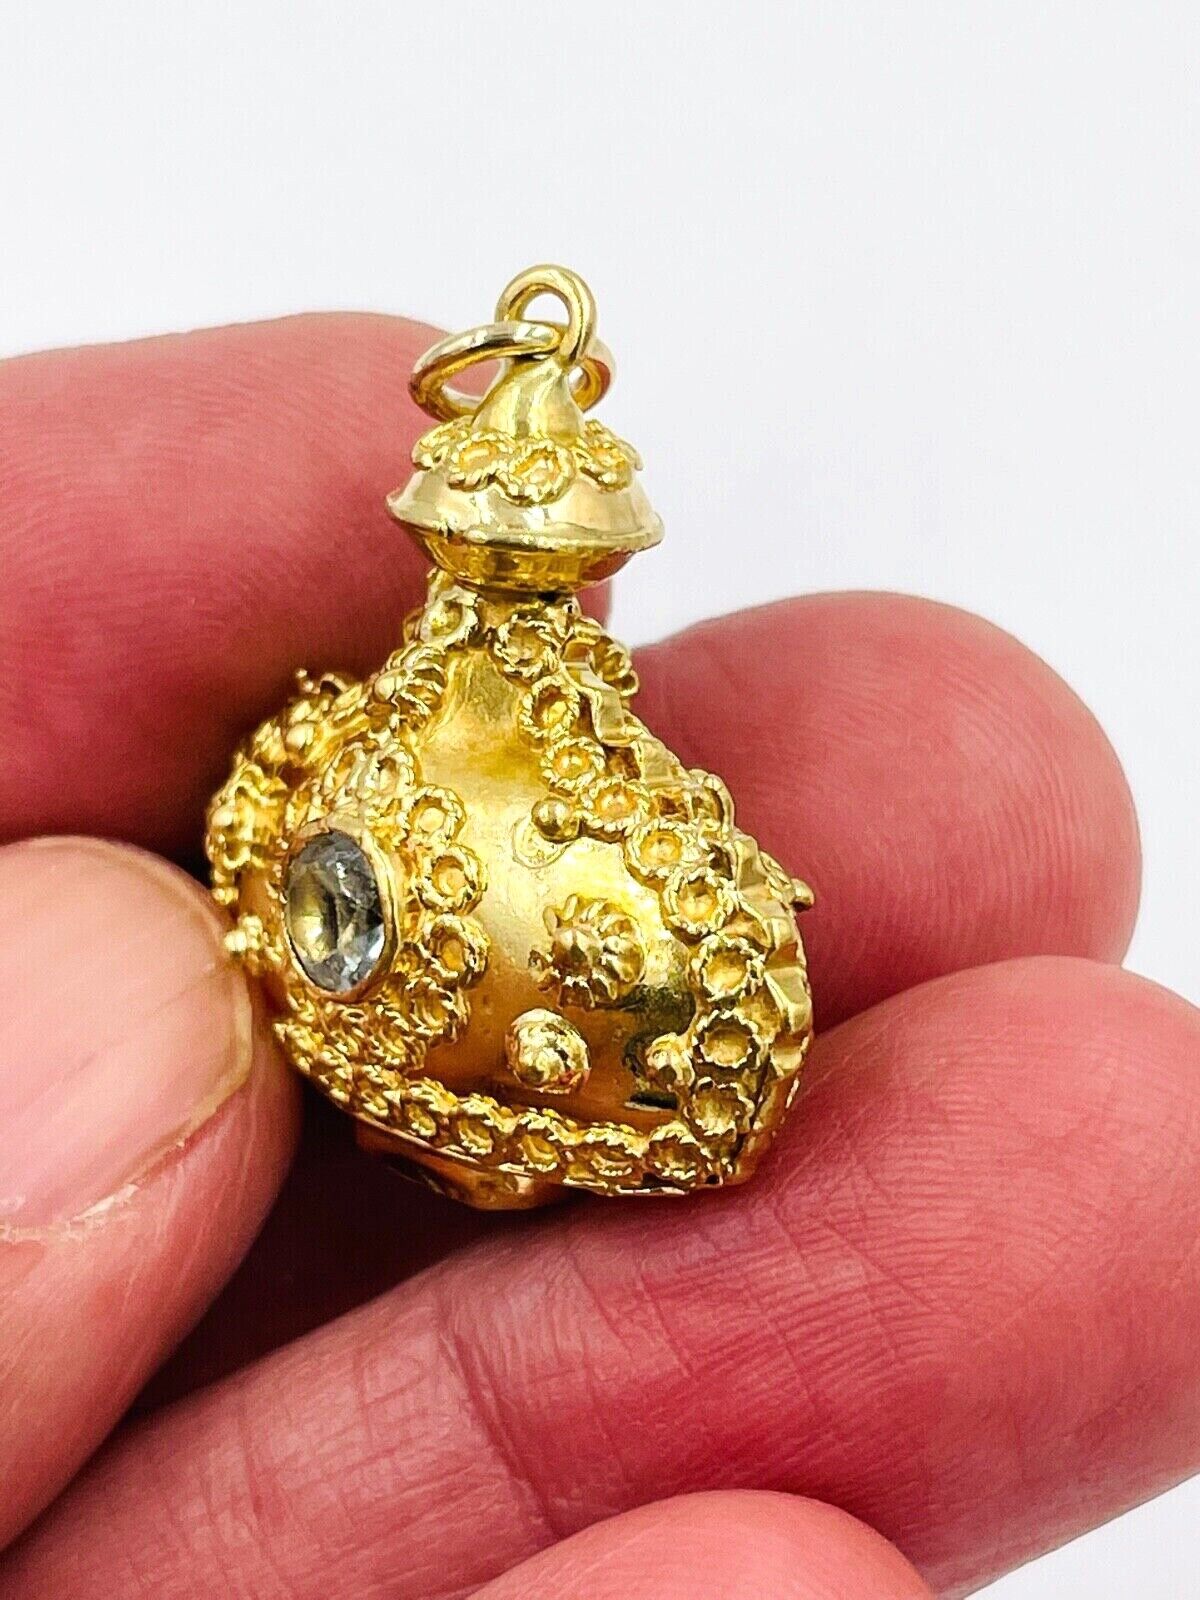 Vintage 18K Gold Genie bottle Charm Pendant with Aquamarine Gemstones